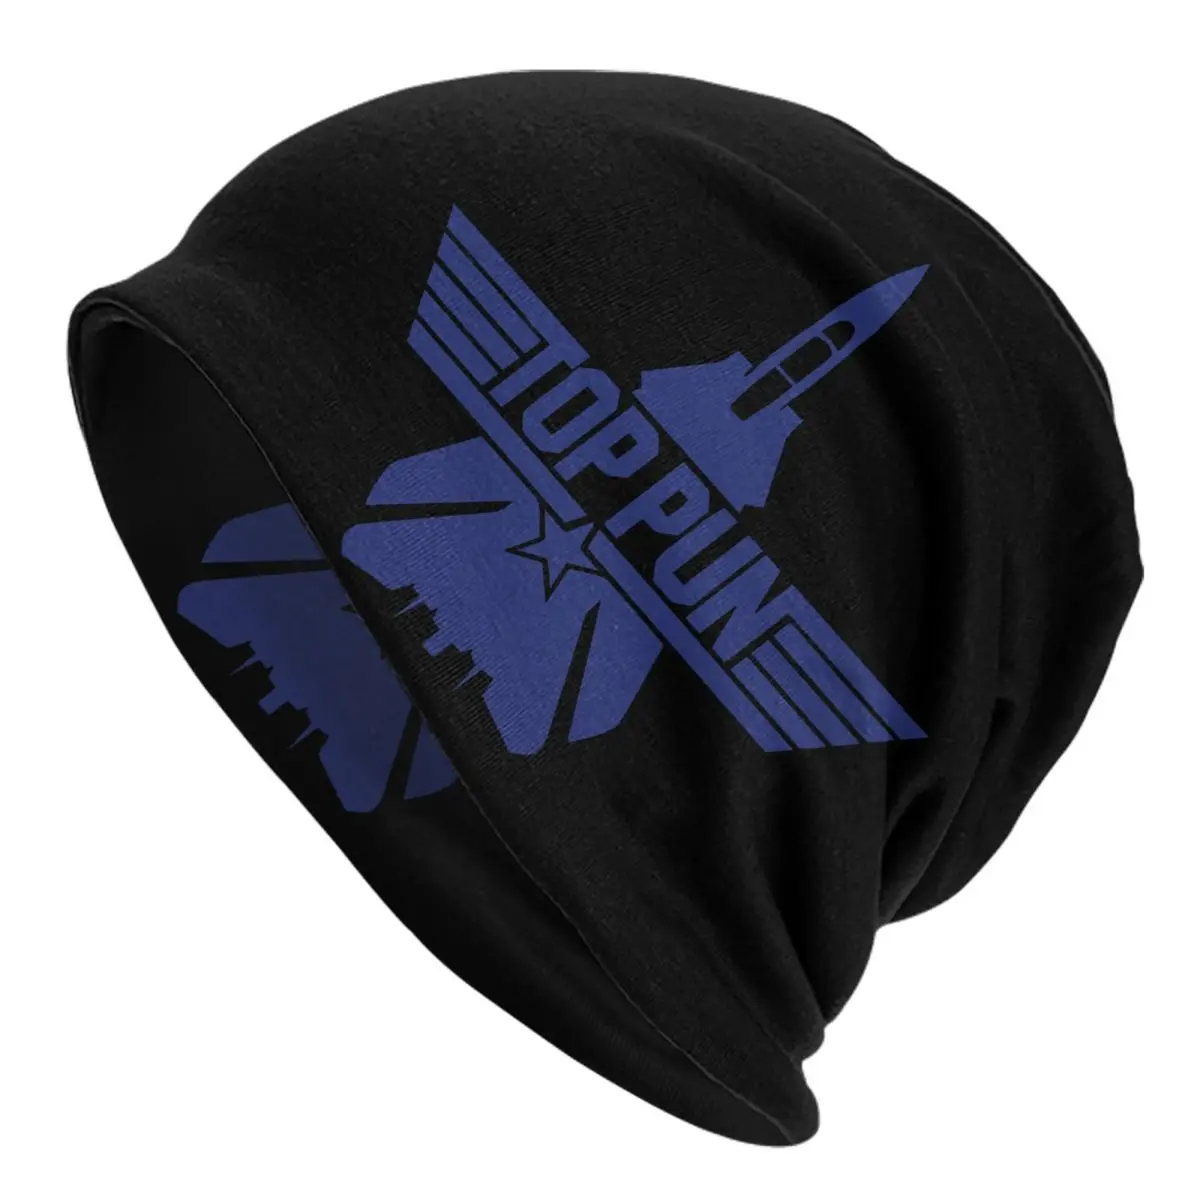 Top Gun Adult Men's Women's Knit Hat Keep warm winter knitted hat